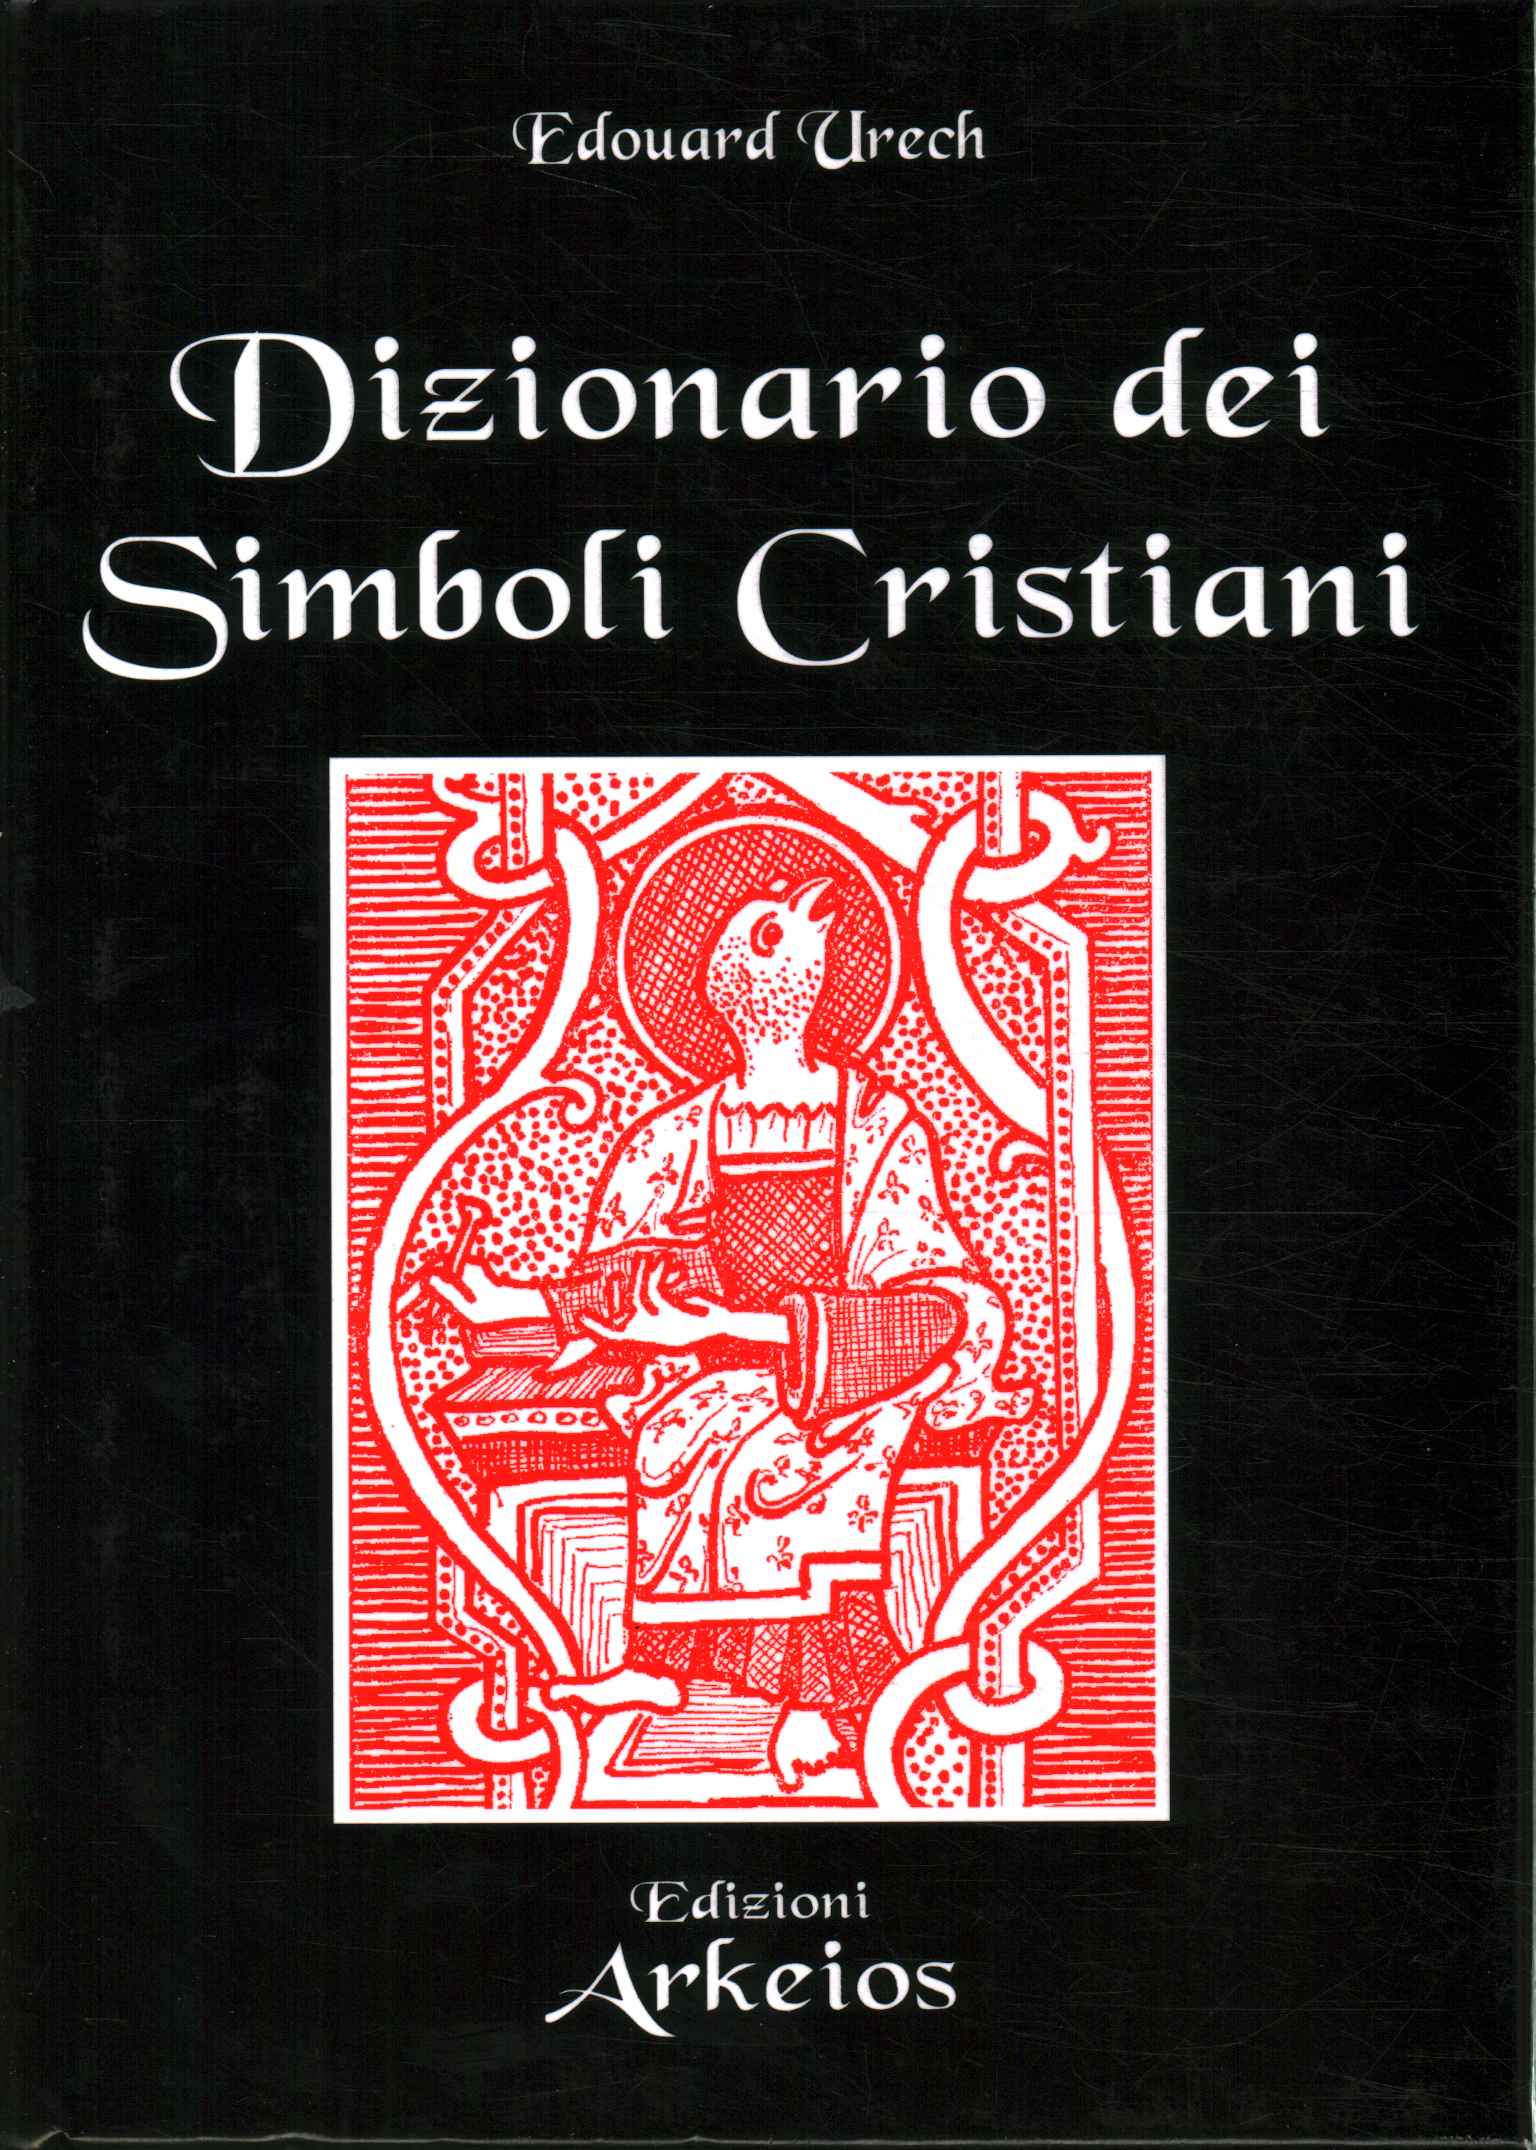 Dictionary of Christian Symbols